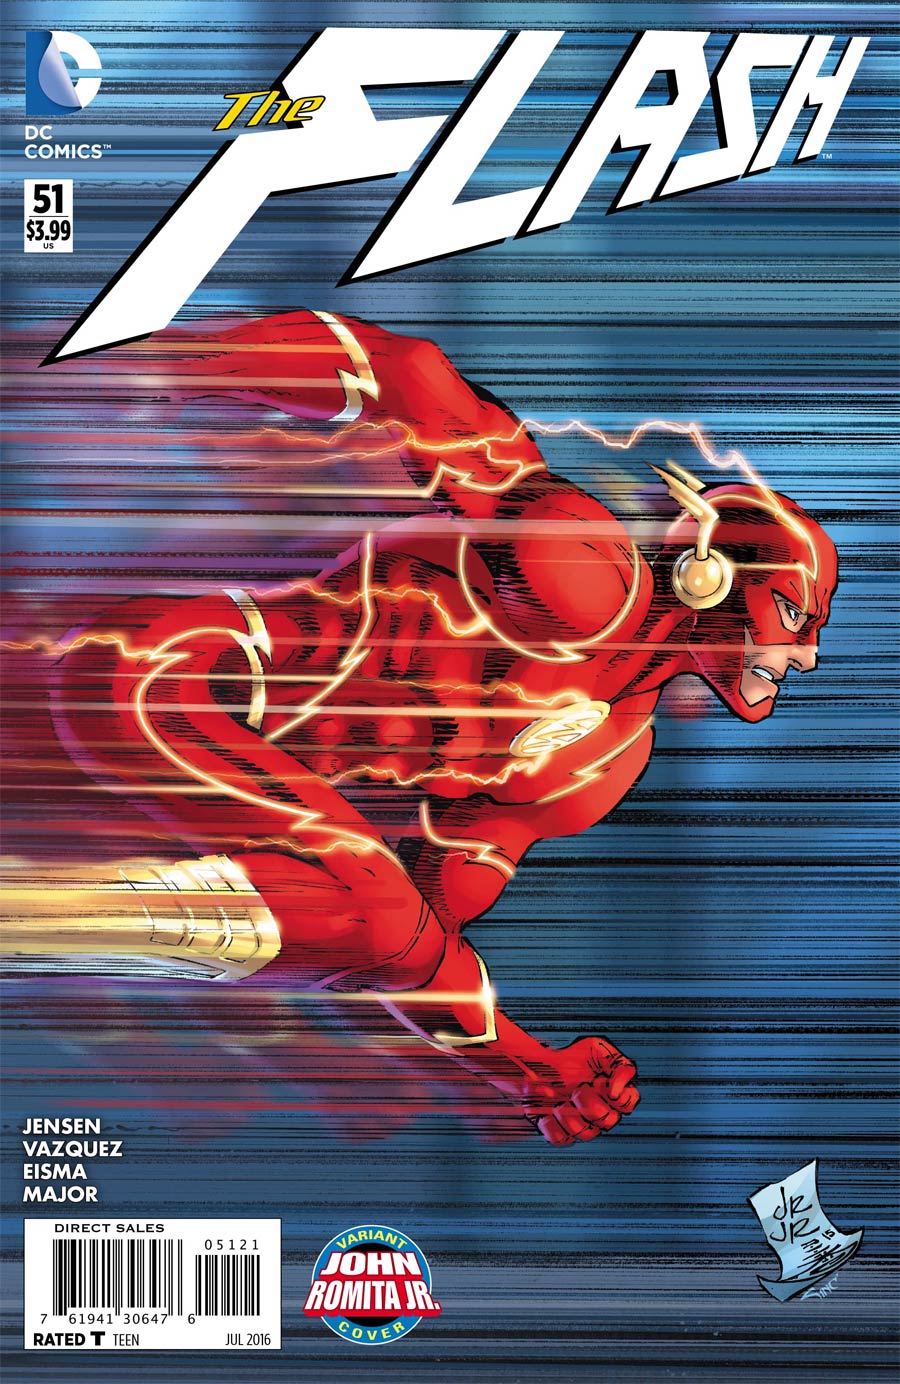 Flash Vol 4 #51 Cover B Variant John Romita Jr Cover